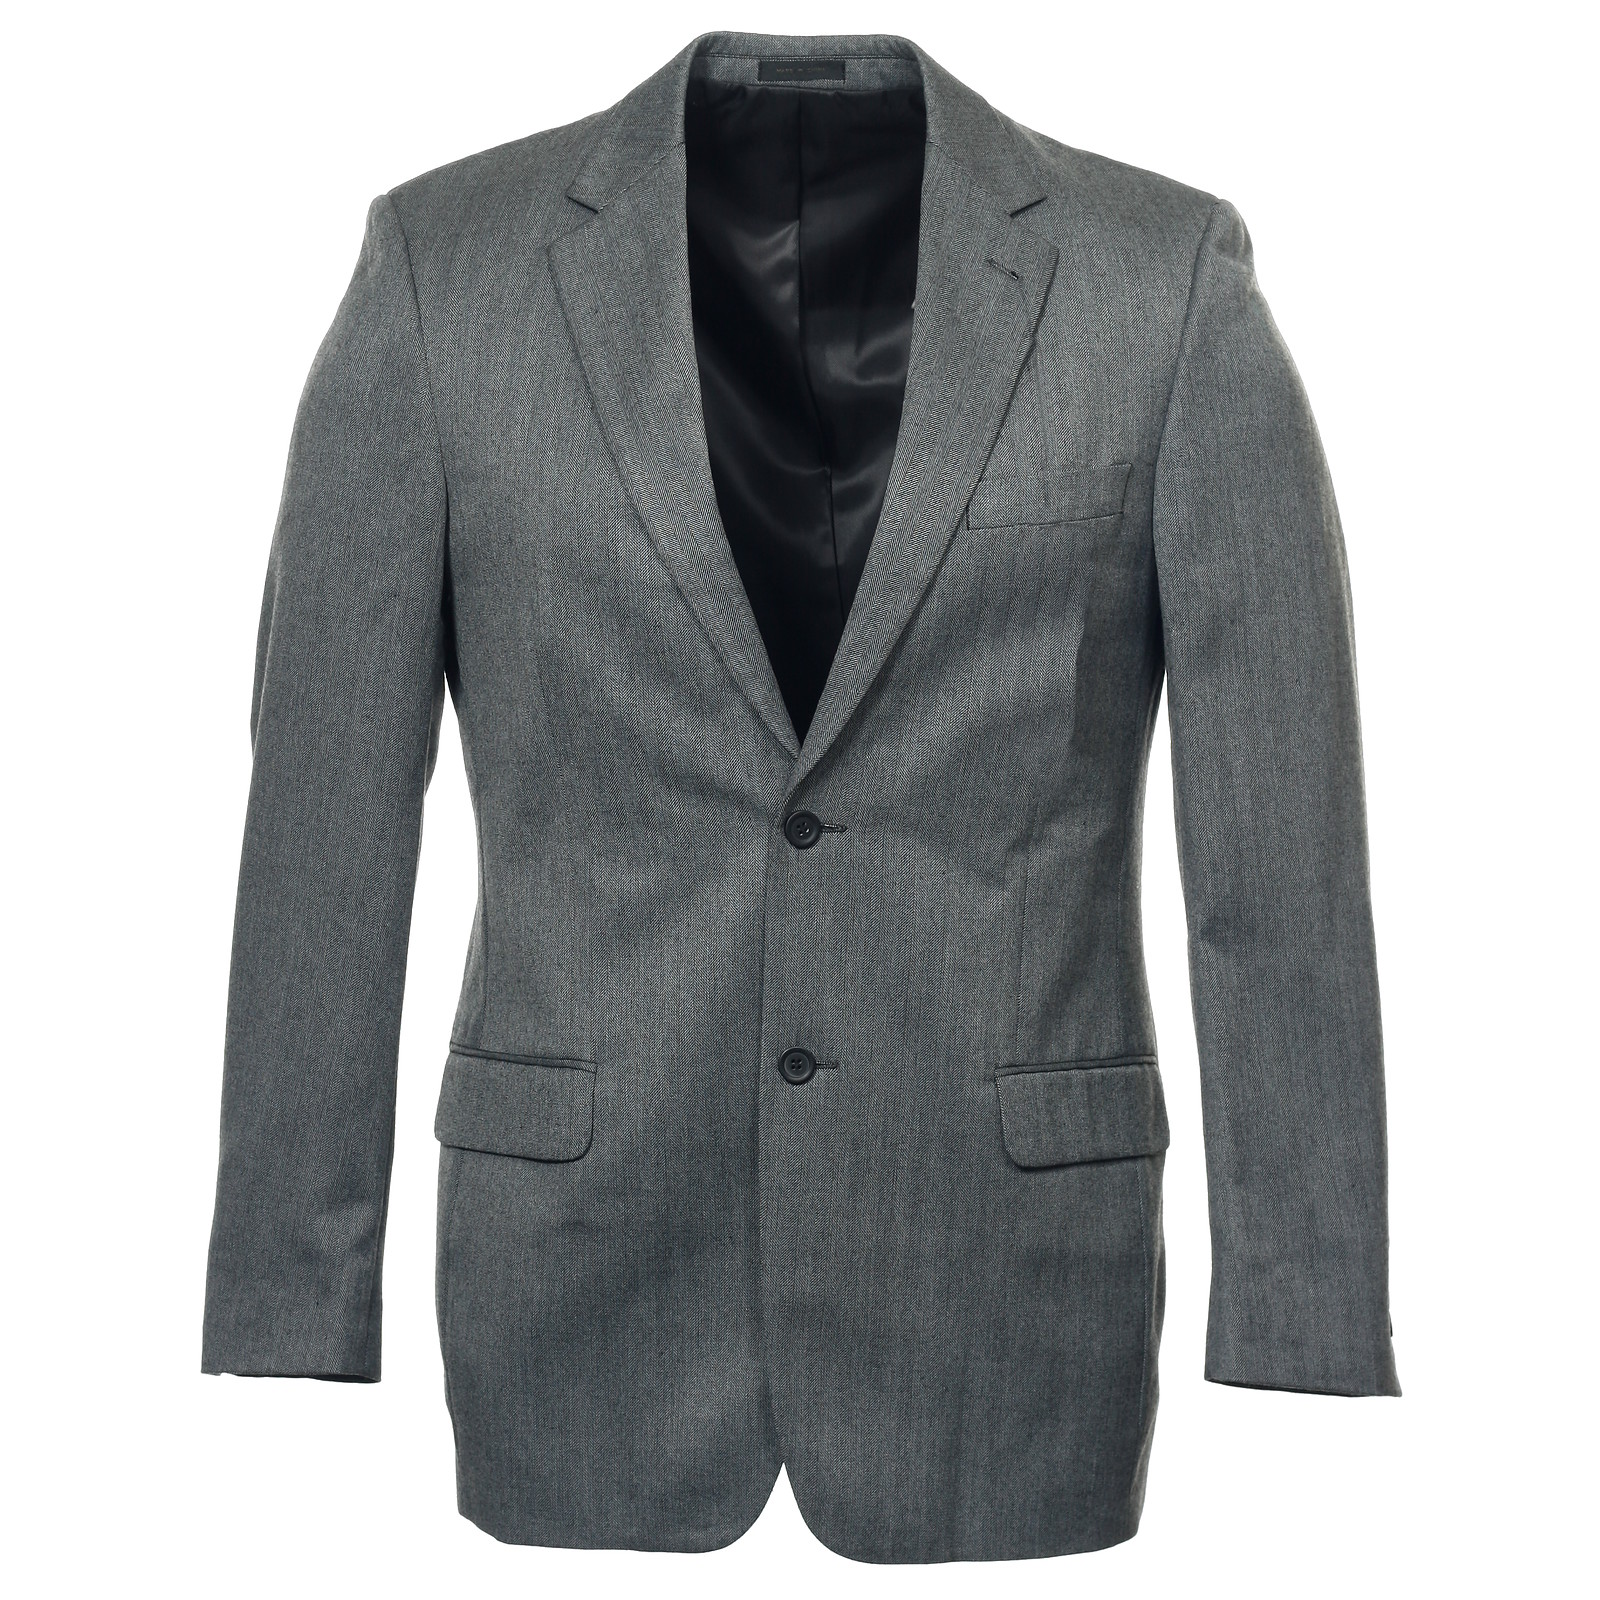 Men's Sport Coats & Blazers - Sears